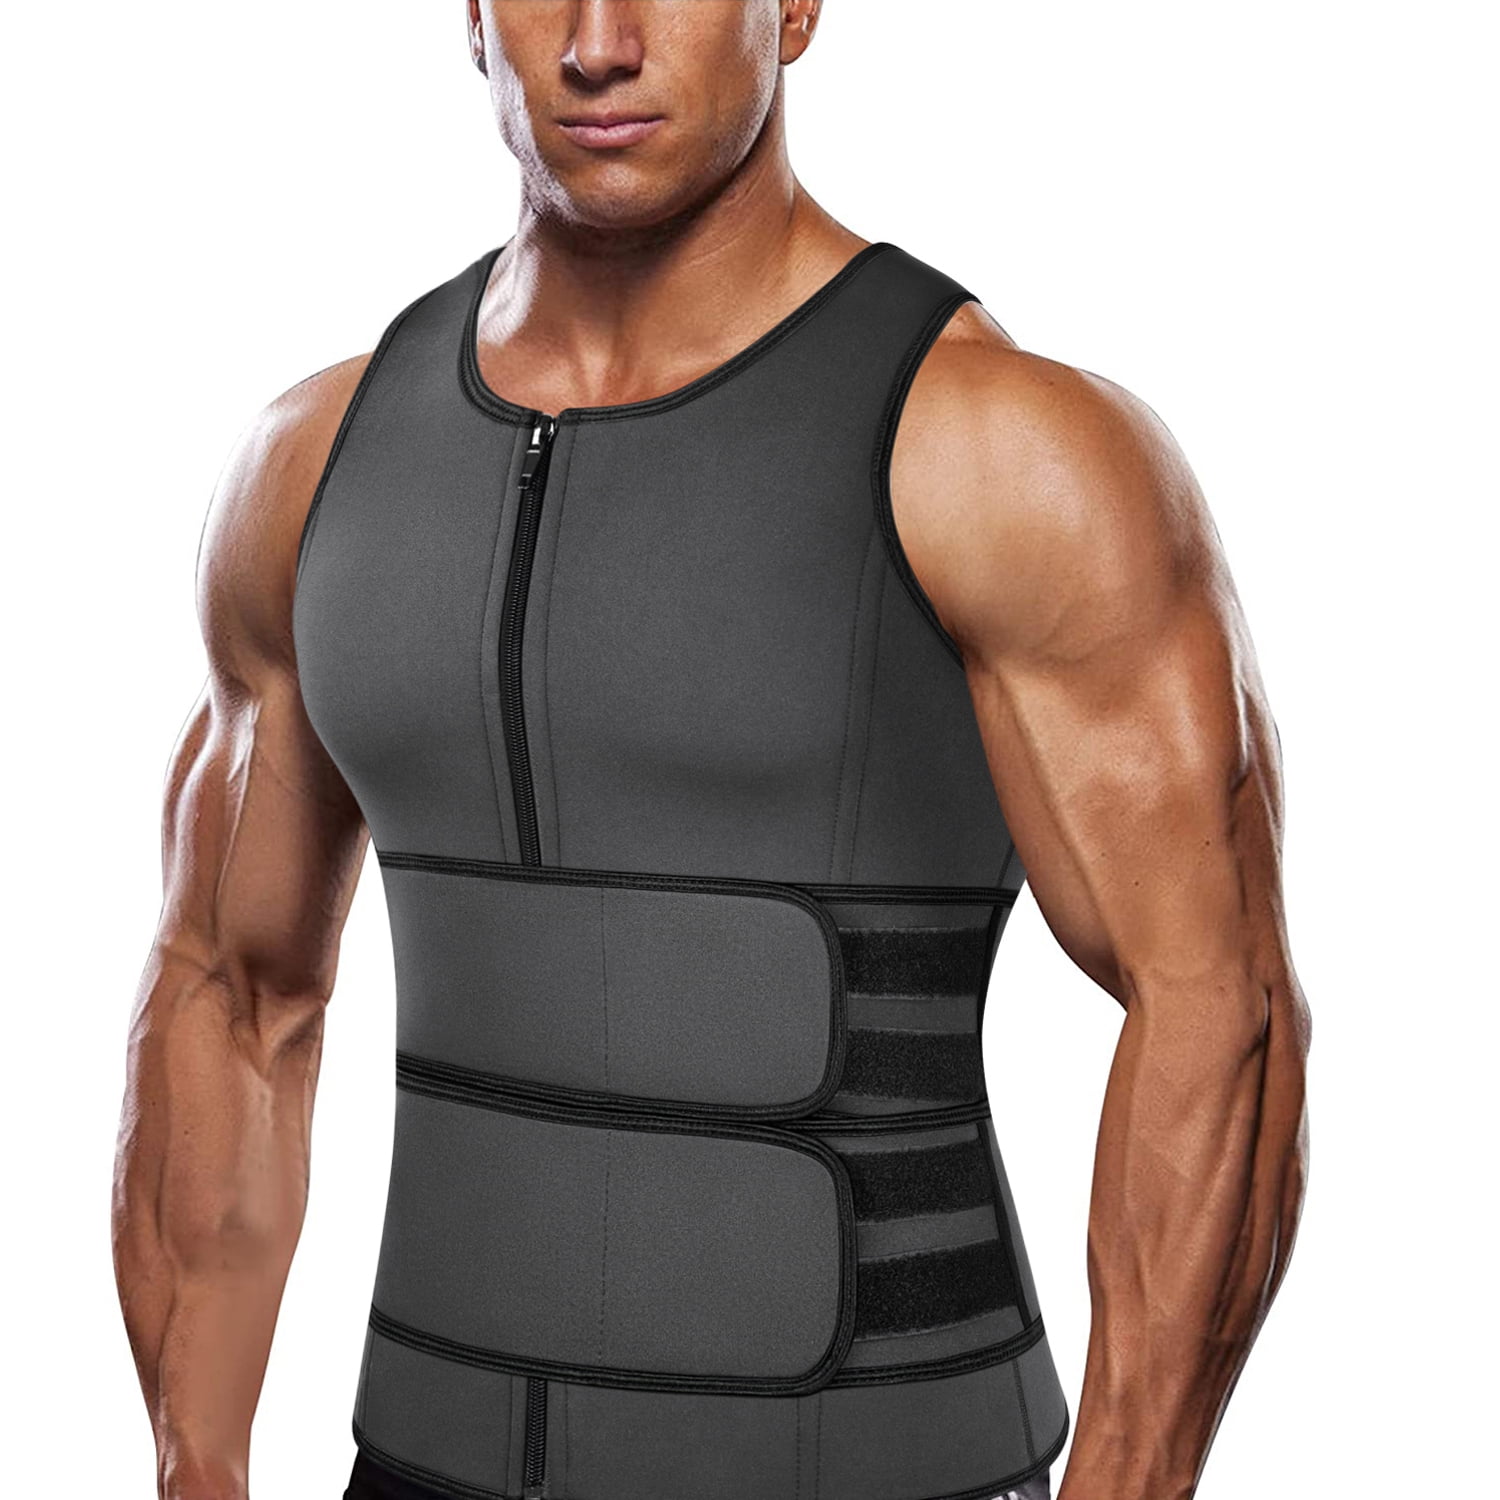 Men’s Enhancing Sweat Vest Hot Sauna Suit Workout Tank for Abdomen Slimming